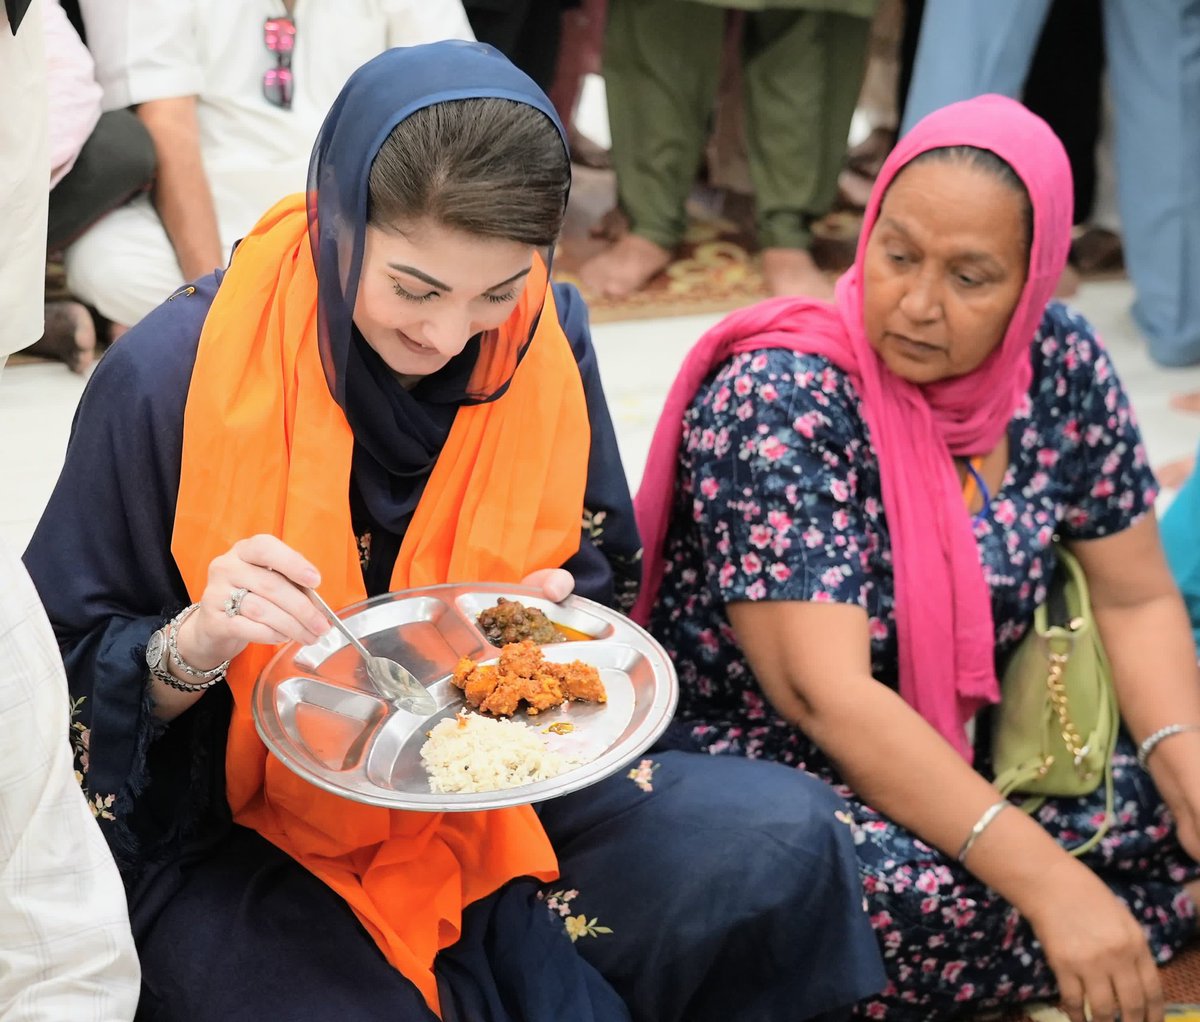 Baisakhi Mela in Kartarpur

The Chief Minister, @MaryamNSharif, joined pilgrims at the Sikh Langar Hall for a meal.